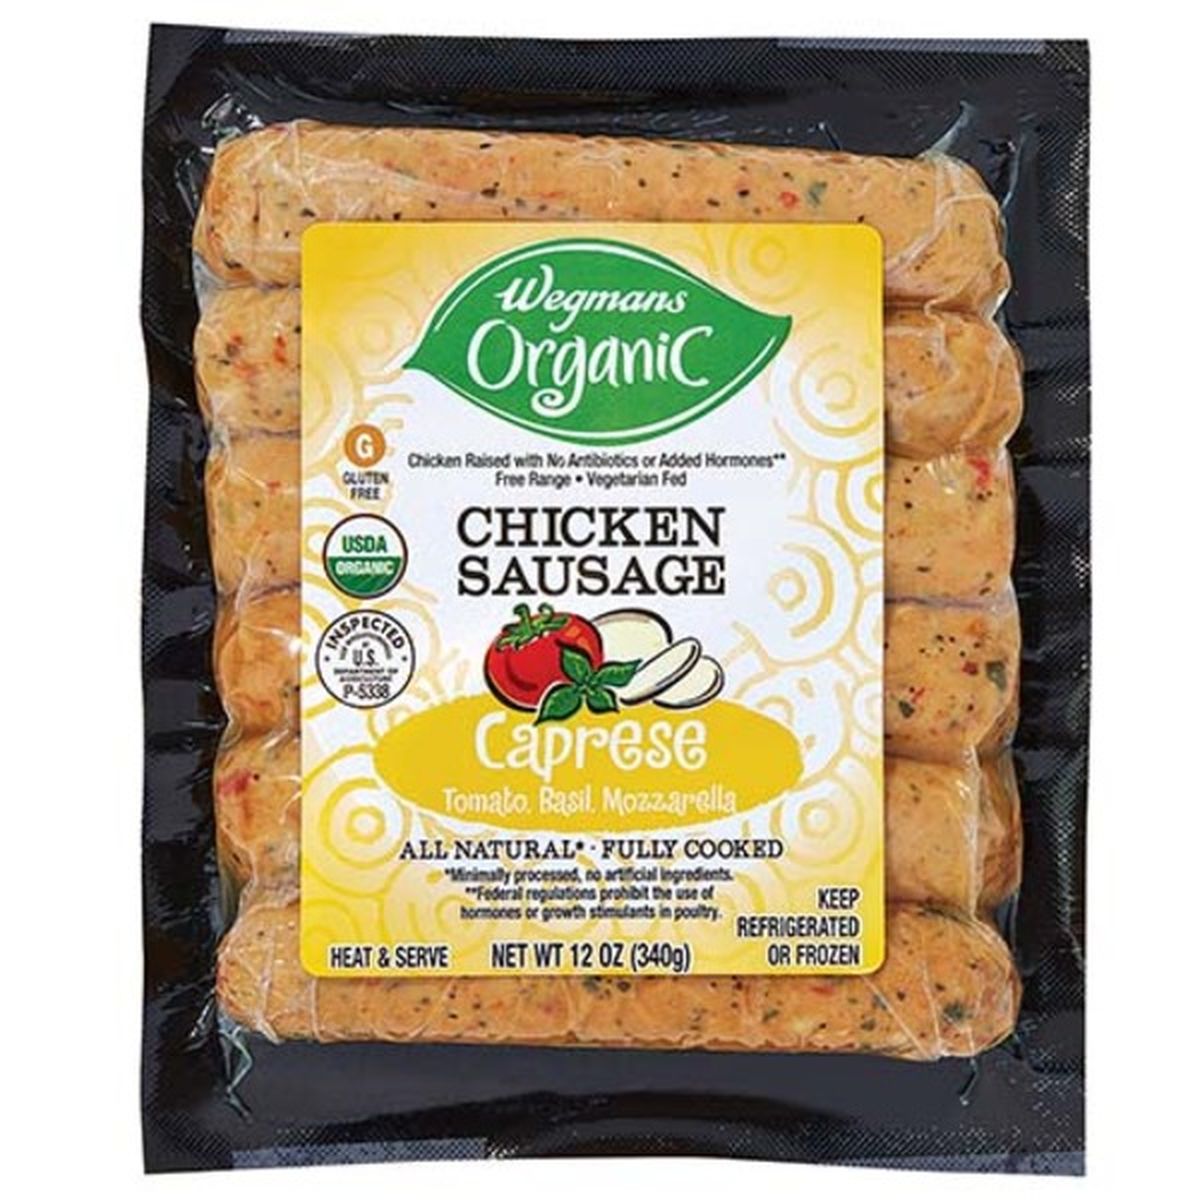 Calories in Wegmans Organic Caprese Chicken Sausage